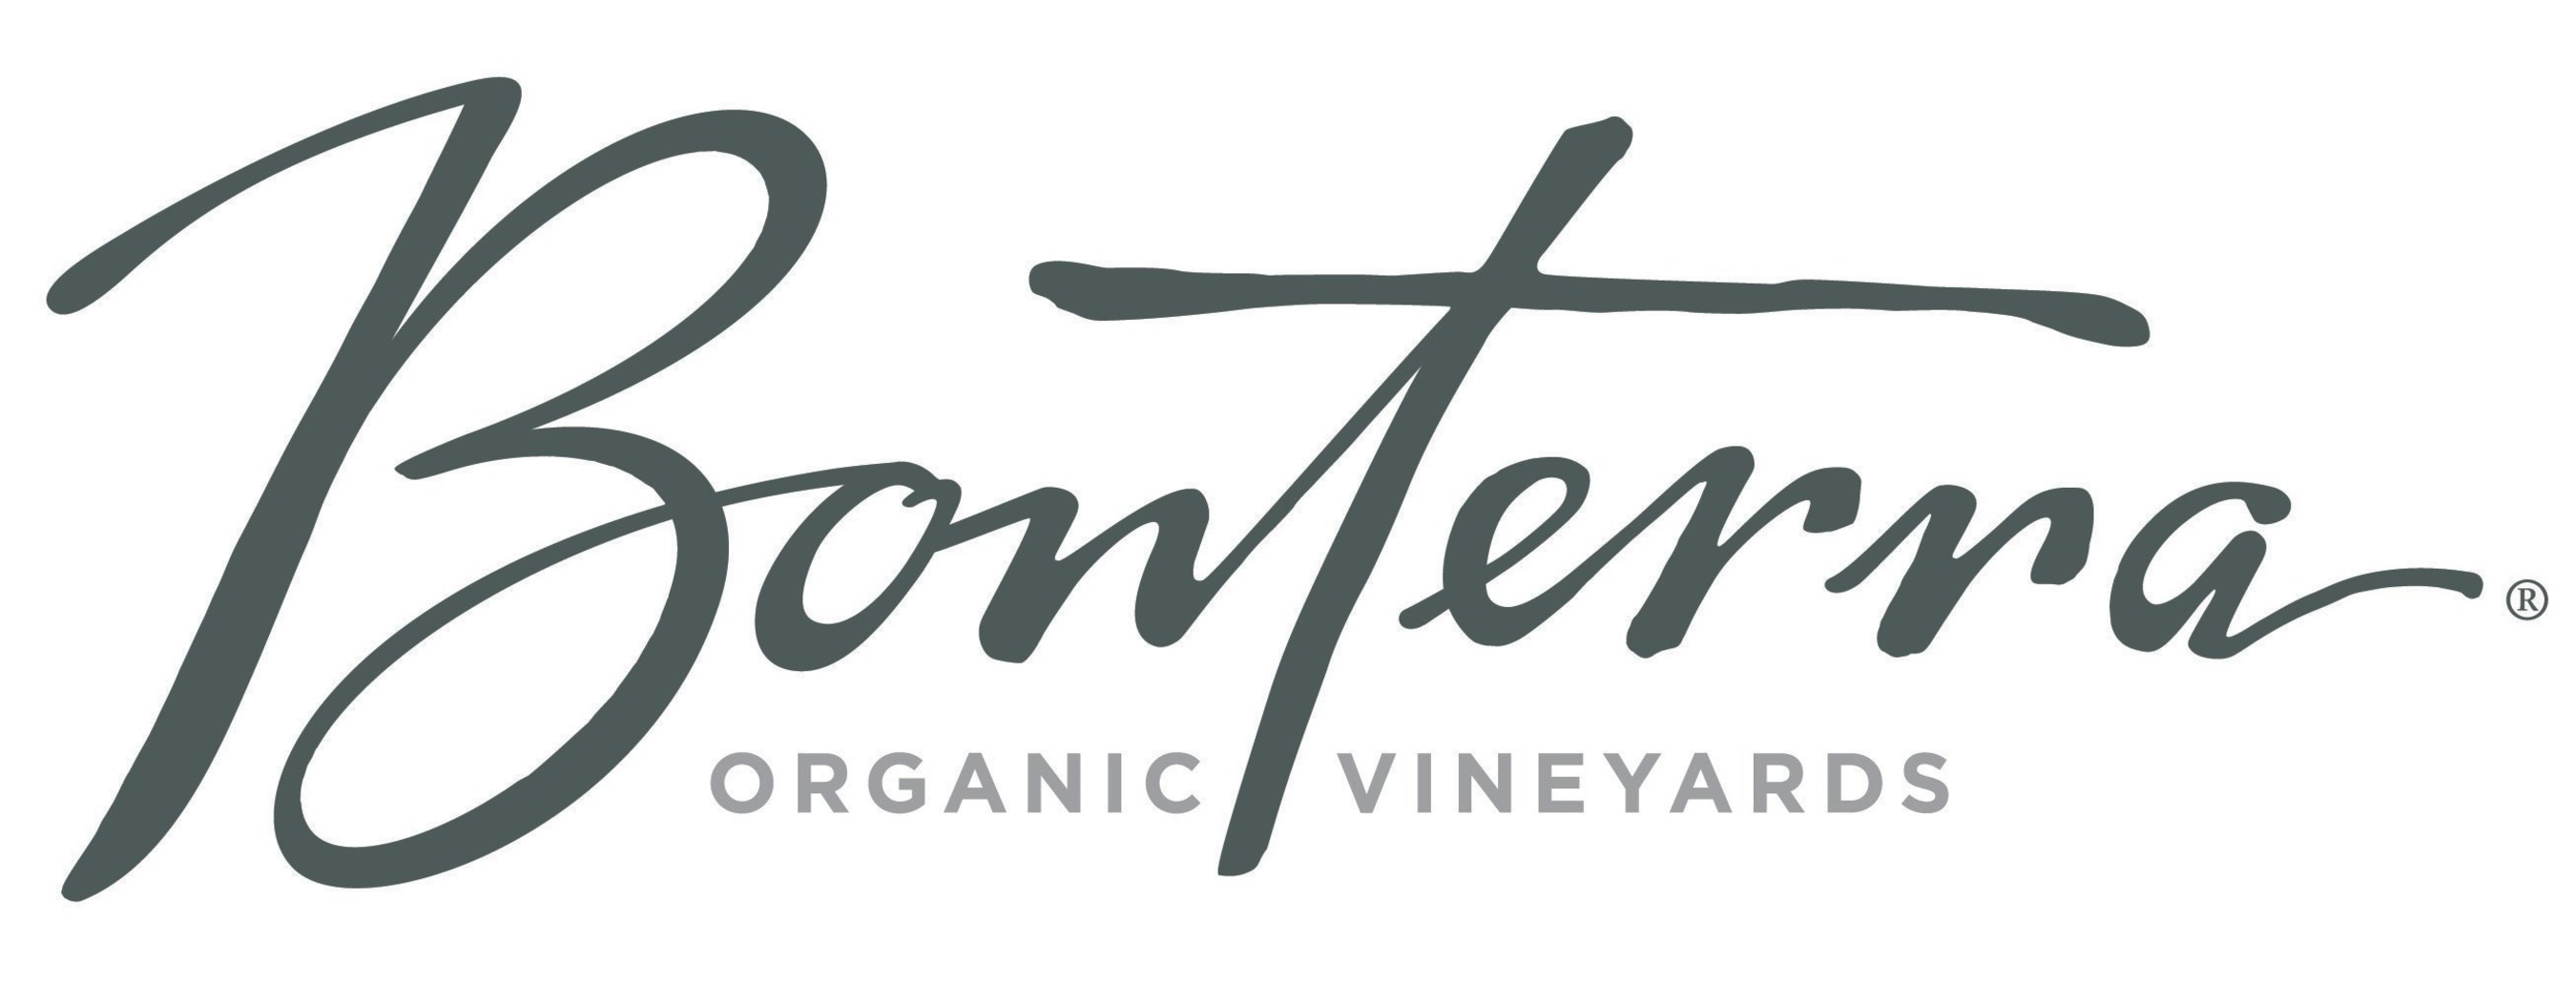 Bonterra Organic Vineyards (PRNewsFoto/Bonterra Organic Vineyards)